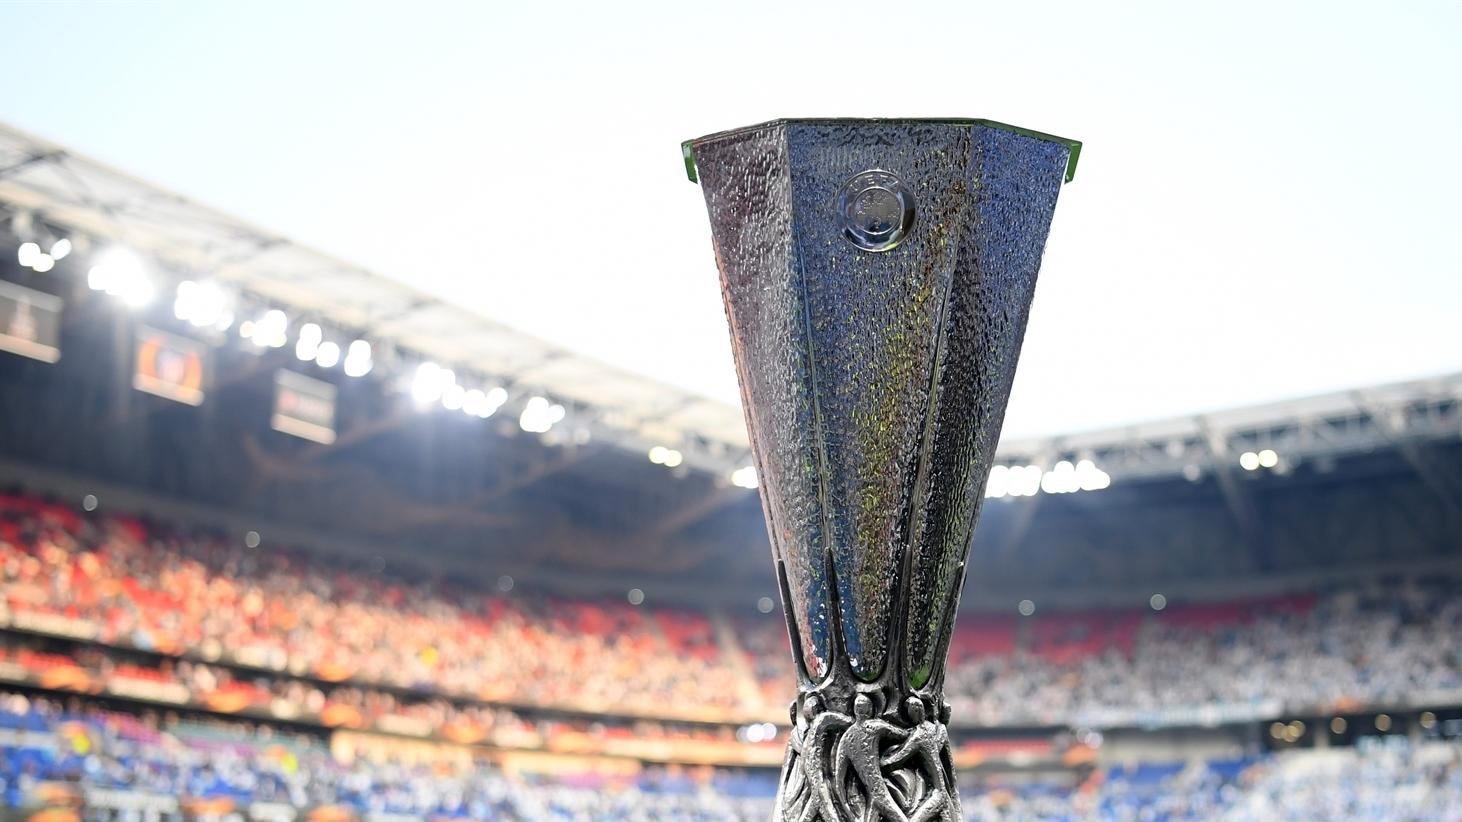 uefa europa league trophy